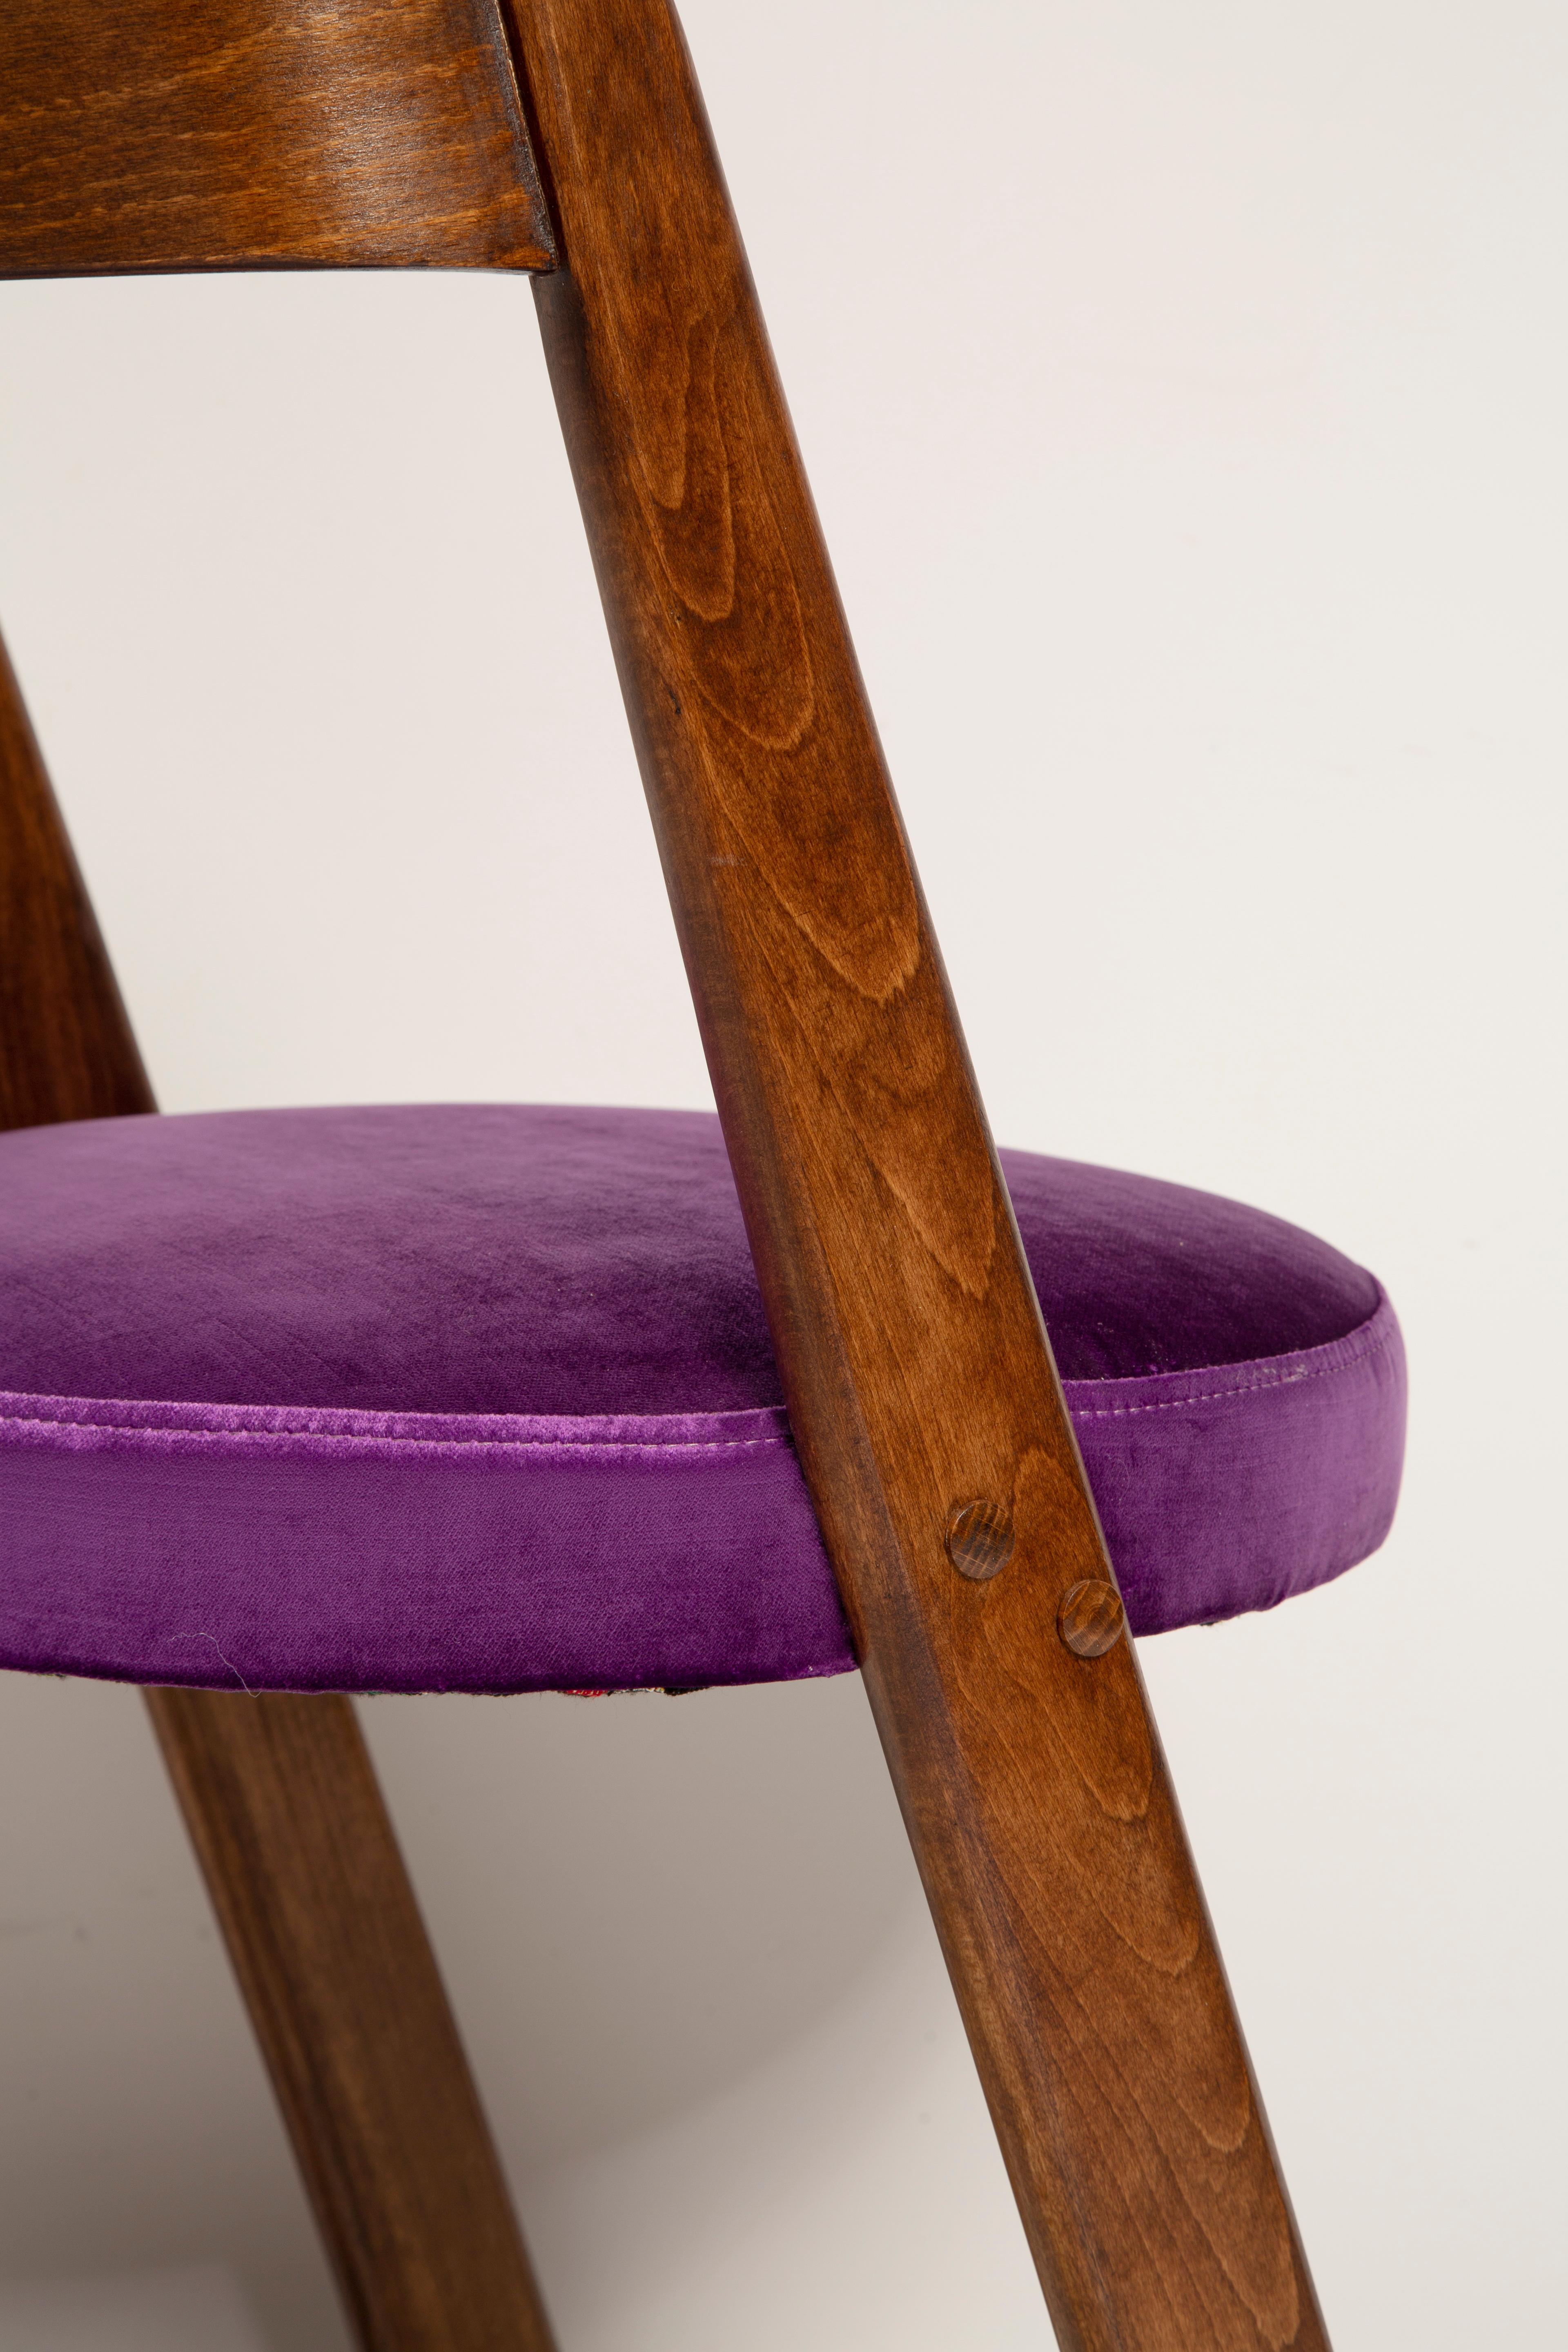 Midcentury Purple Velvet Halfa Chair and Stool, Baumann, France, 1970s For Sale 3